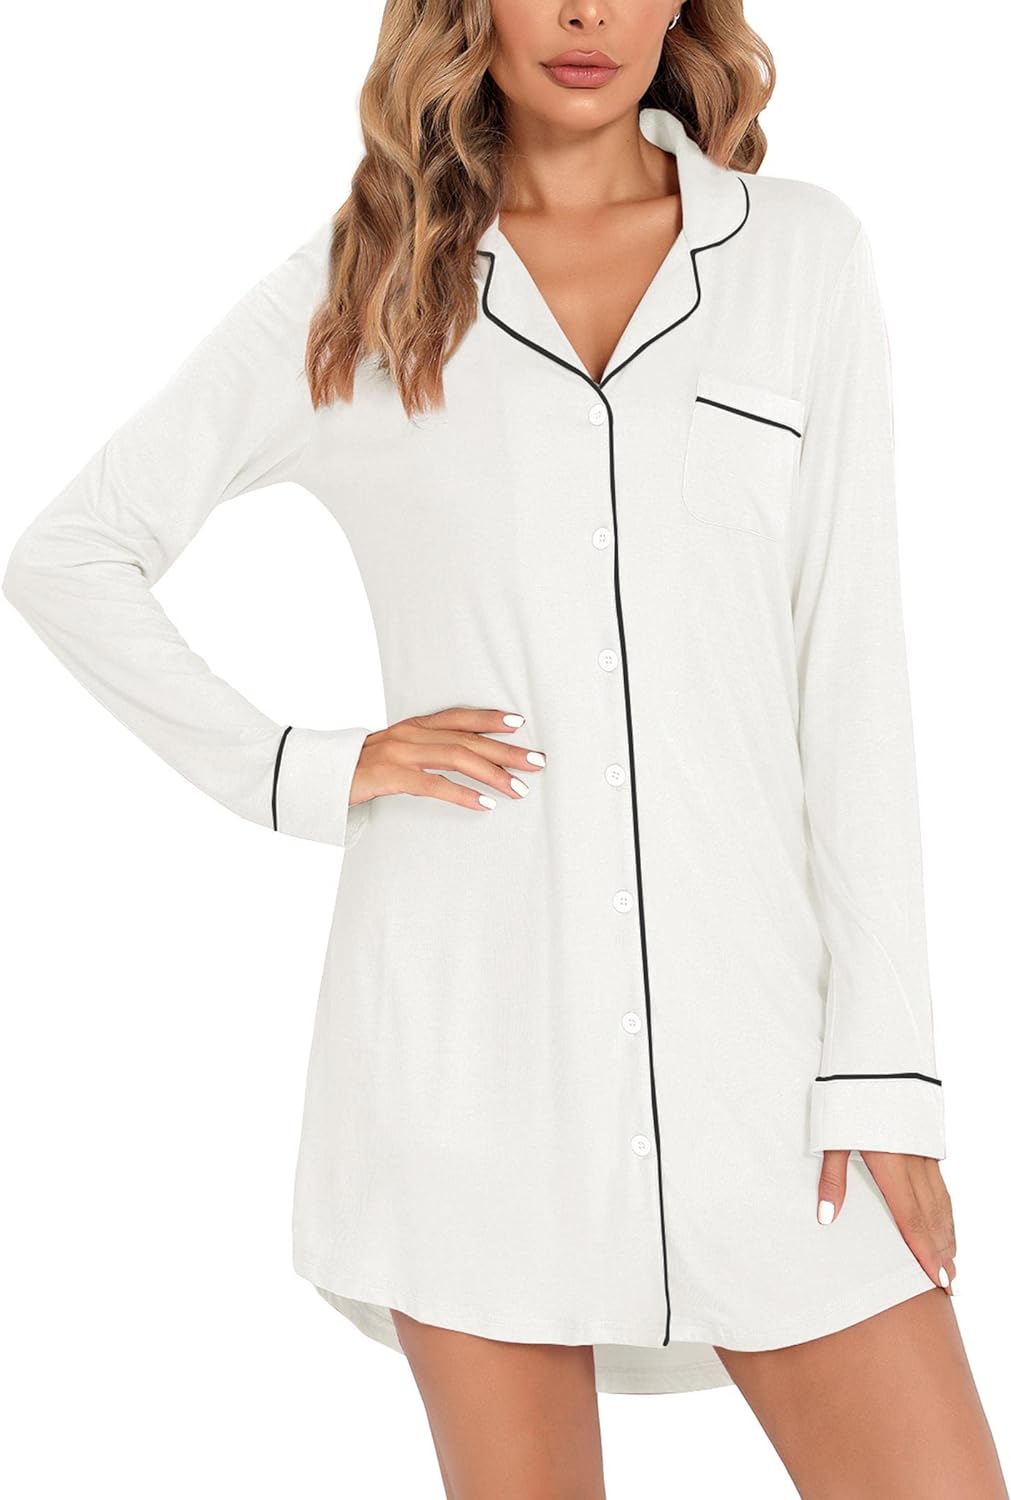 Leikar Nightgowns For Women Button Down Pajamas Dress Short Sleeve Sleepwear S-XXL